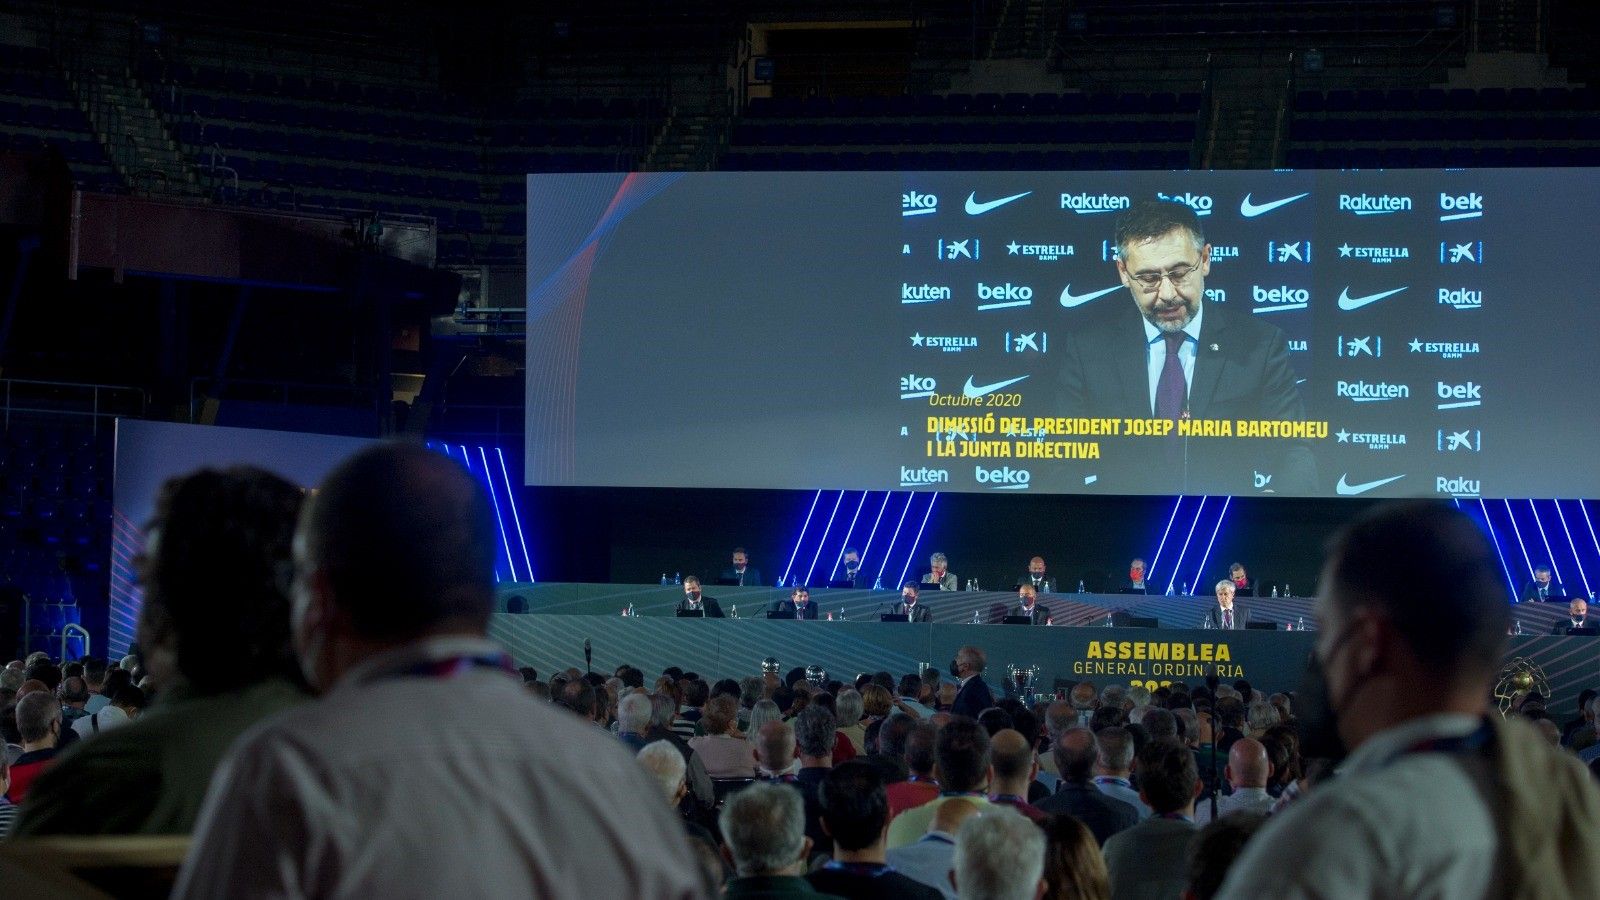 Bartomeu aparece en pantalla durante la asamblea.